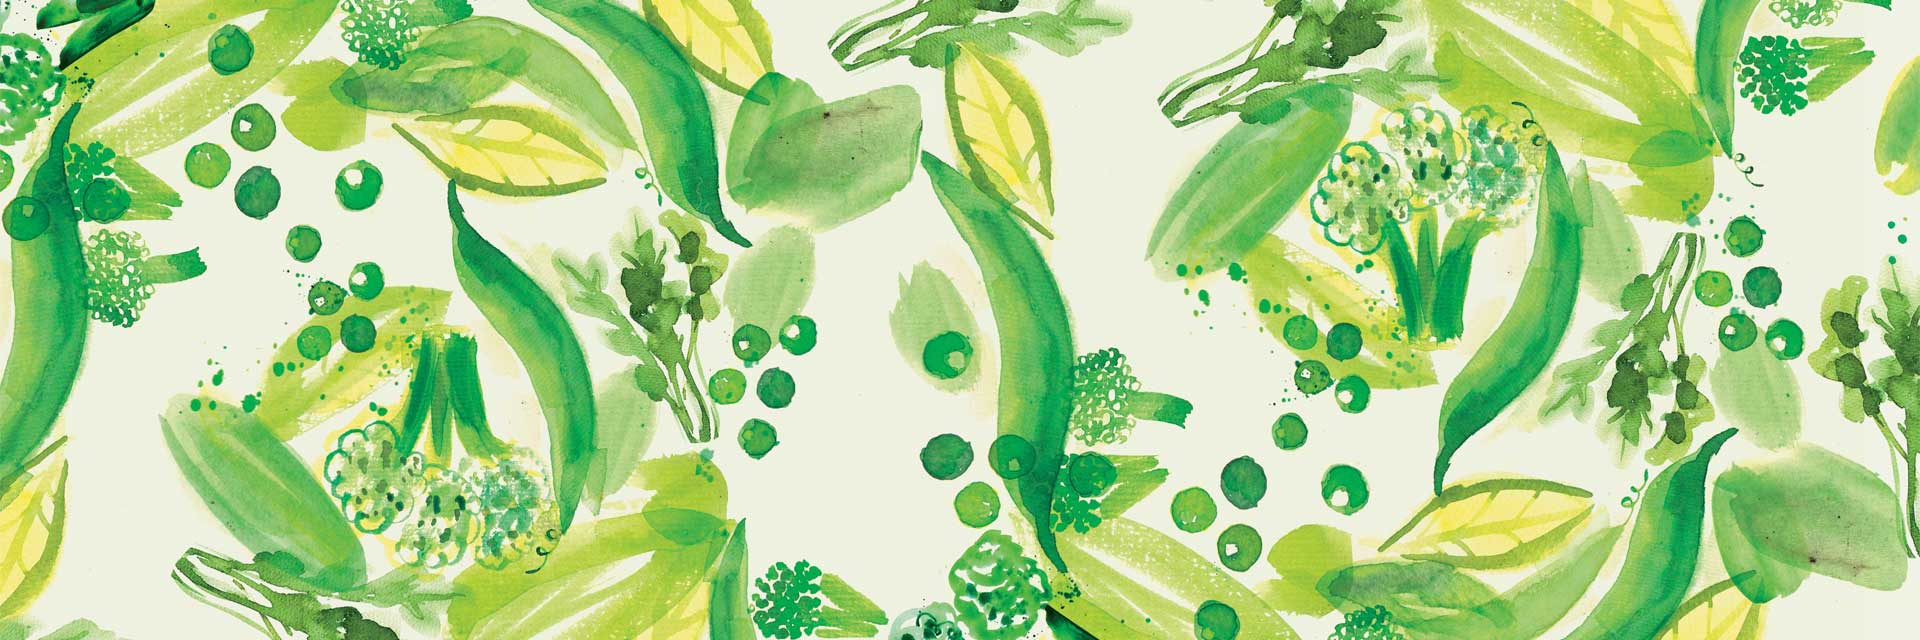 Vegetable illustration